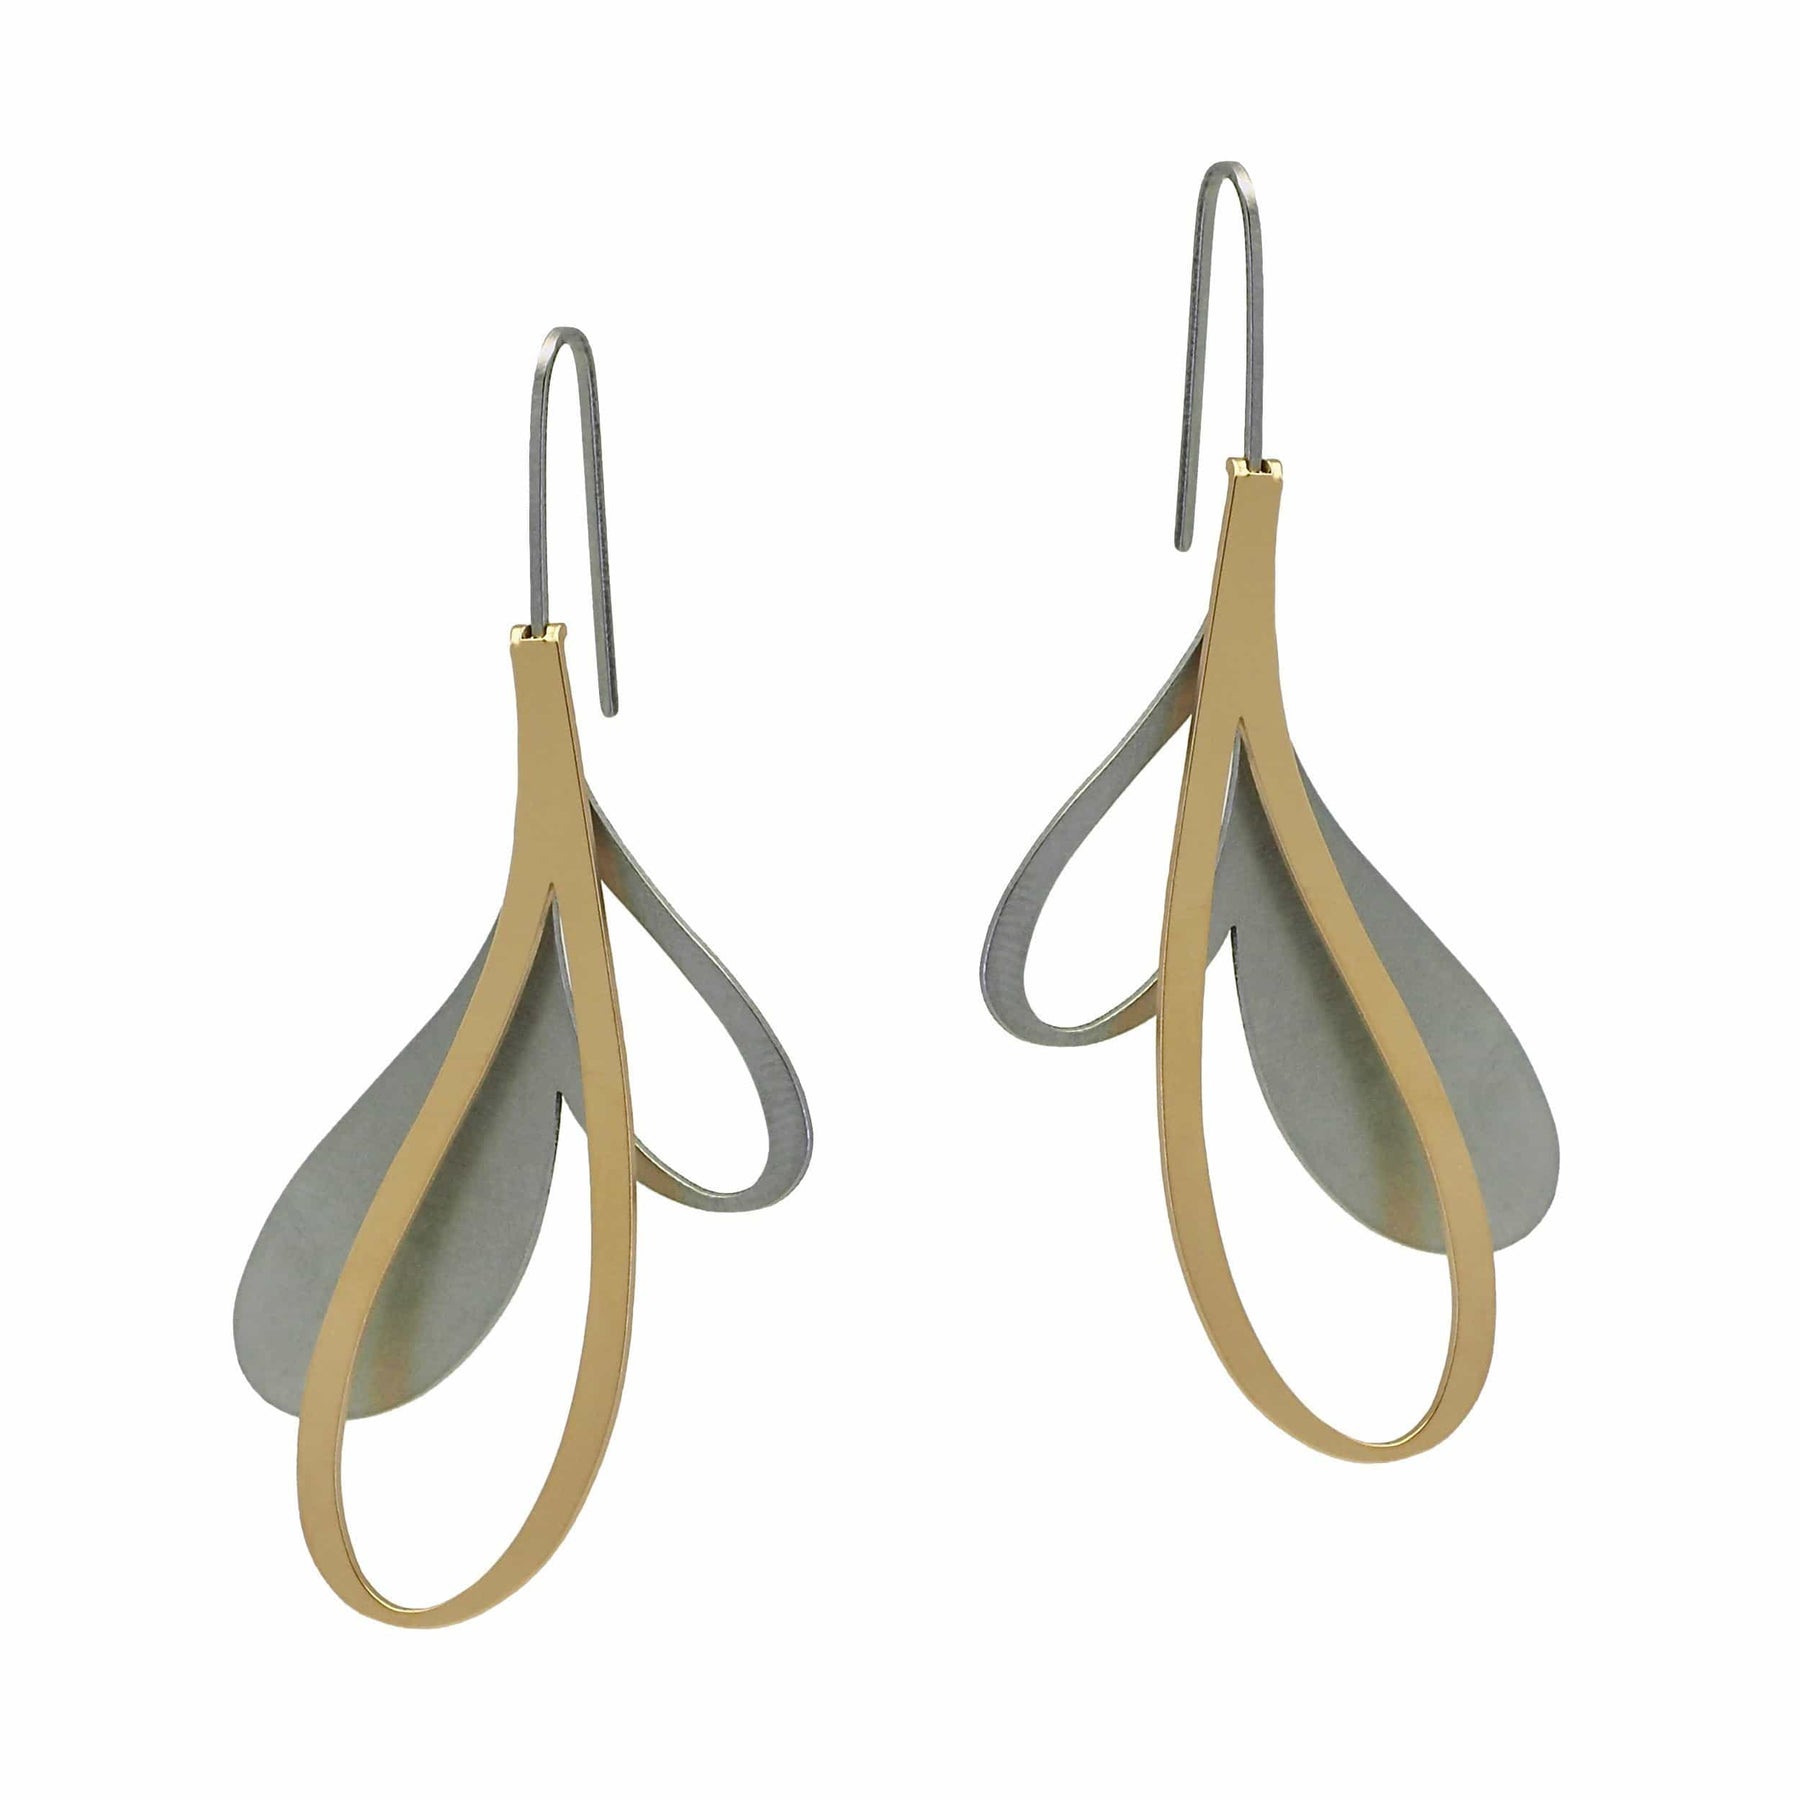 X2 - Petal Earrings - Gold/ Black From Insync design - inSync design